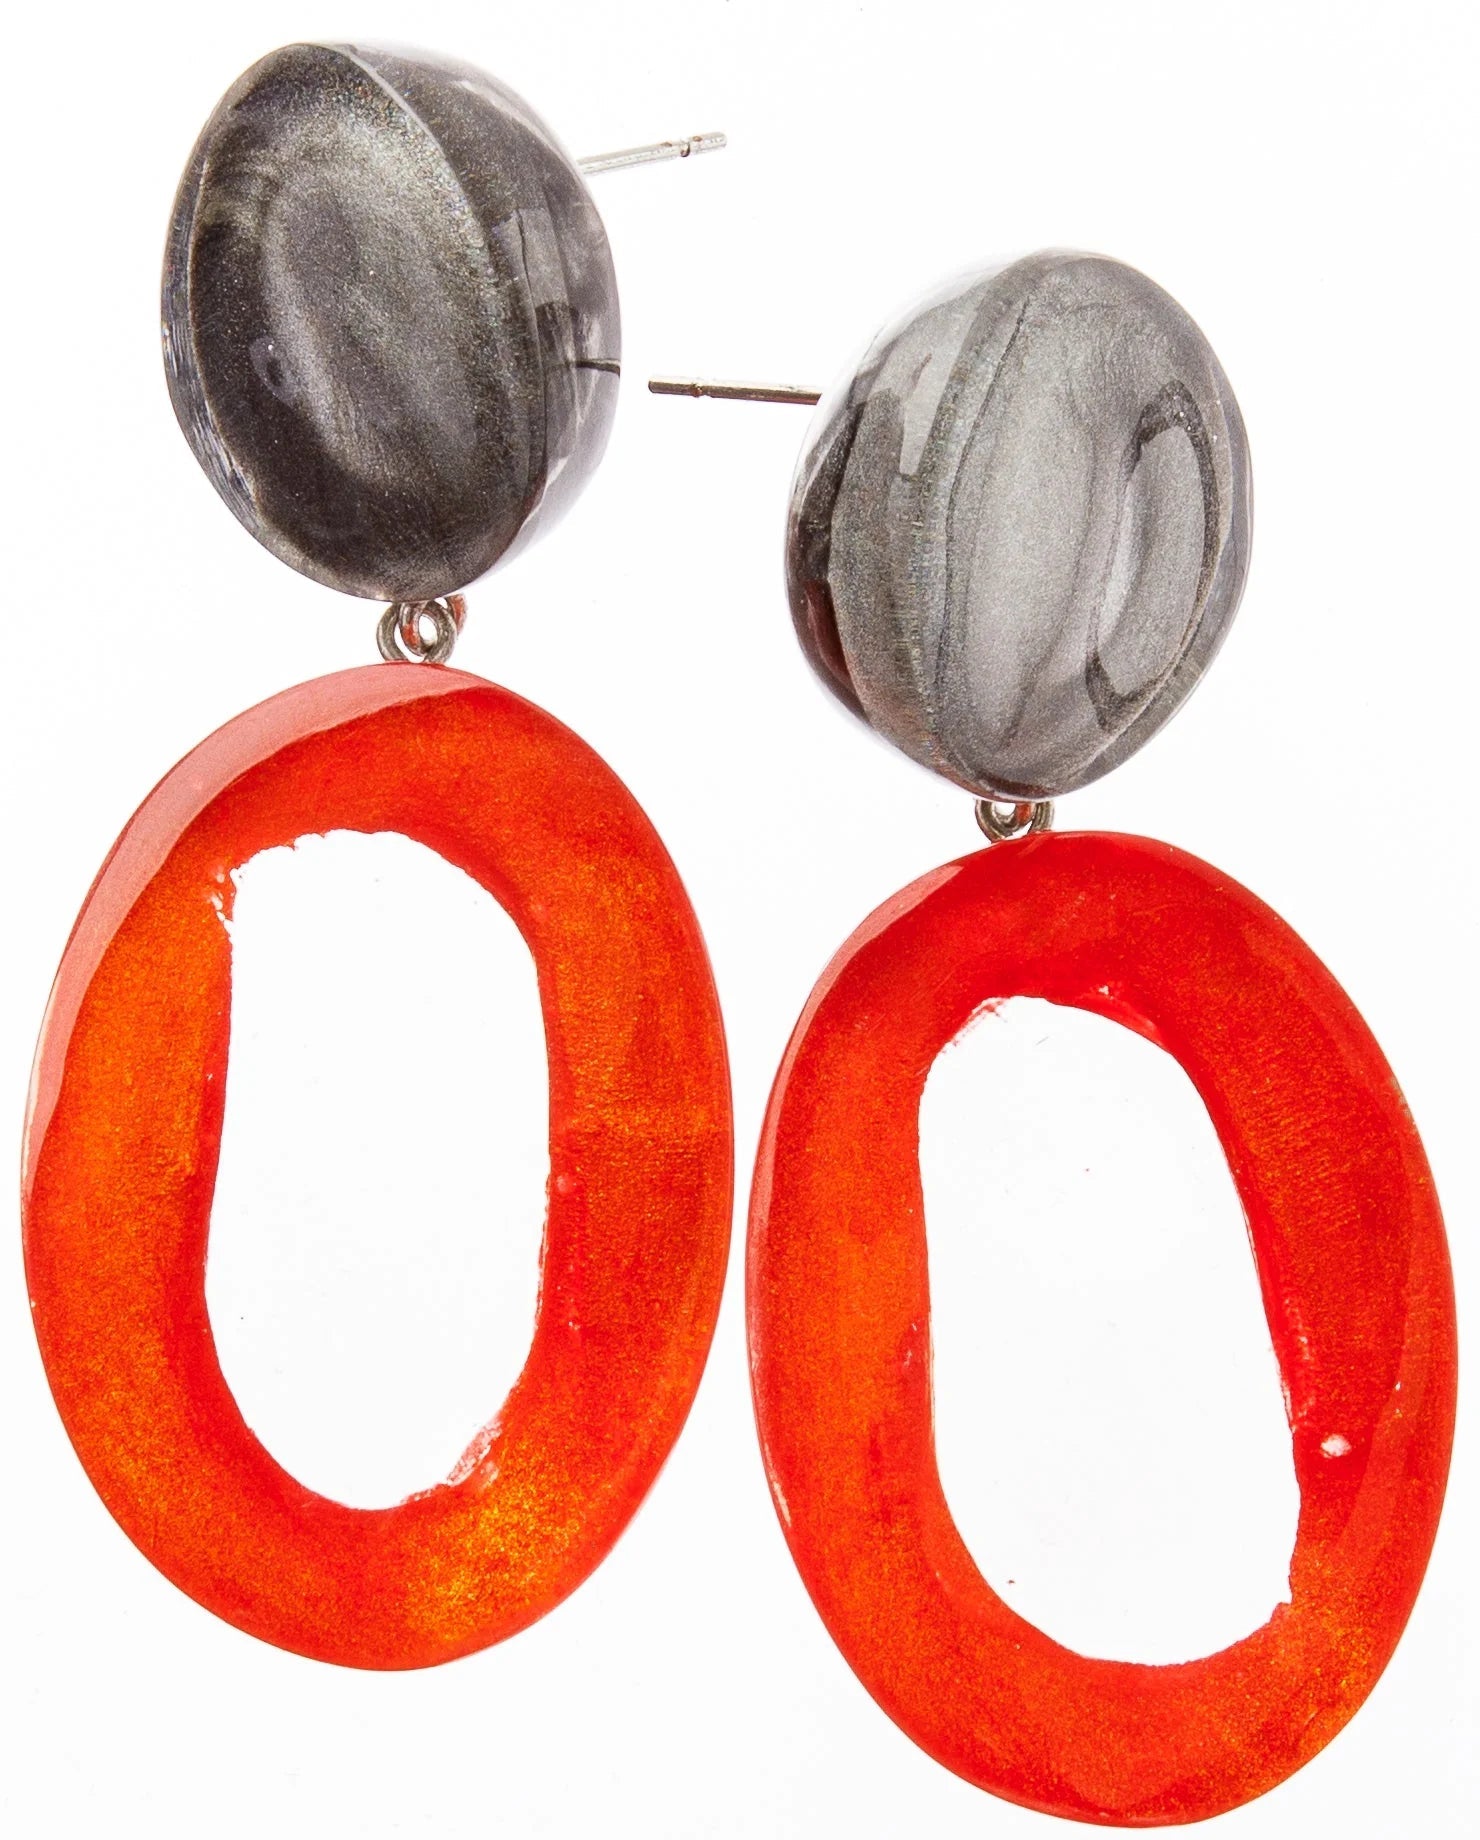 Orange/Grey Earrings - The Nancy Smillie Shop - Art, Jewellery & Designer Gifts Glasgow